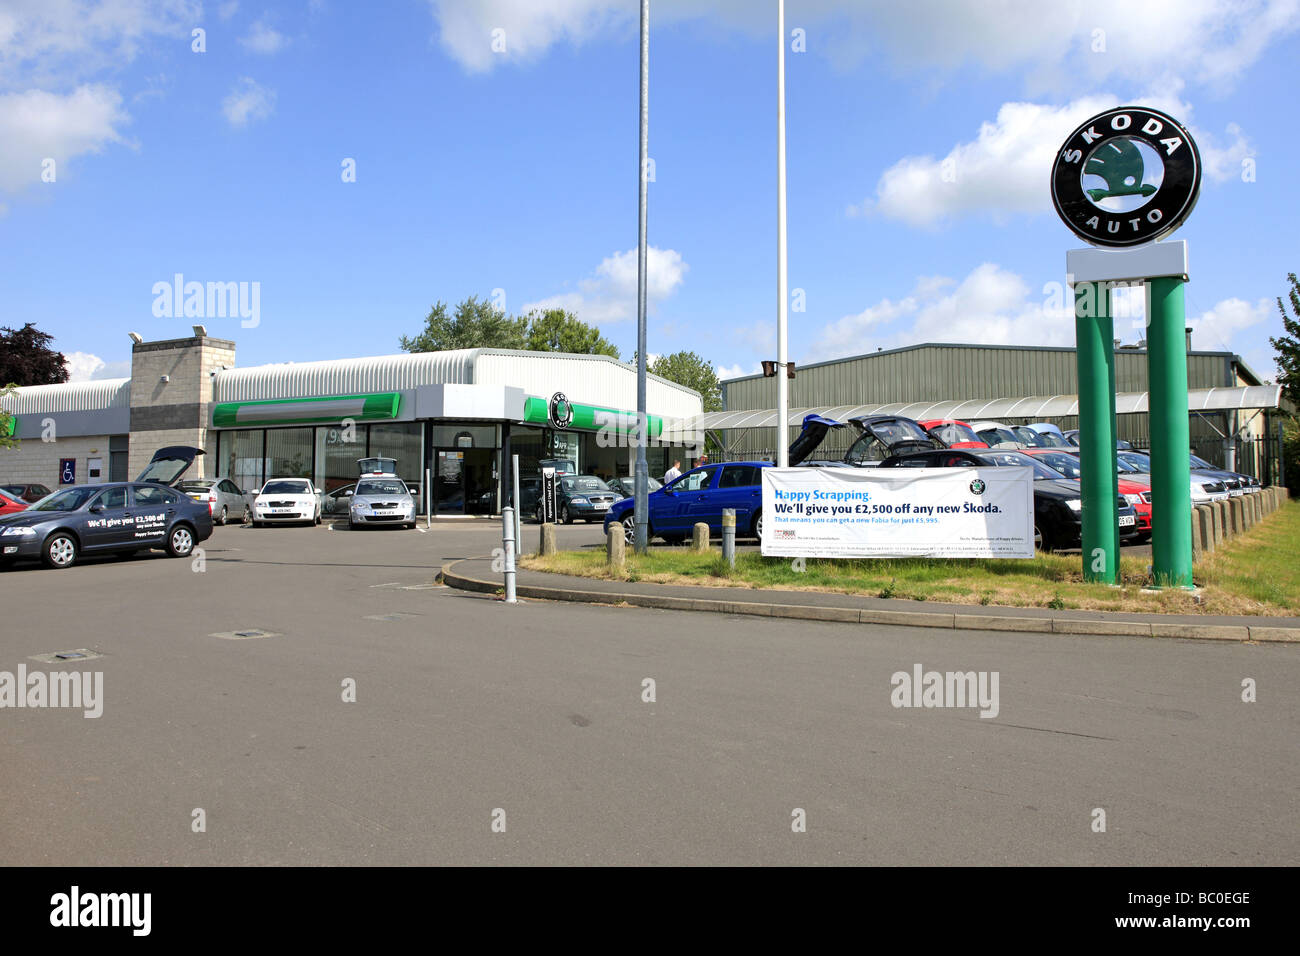 Skoda German Car dealership and forecourt Stock Photo